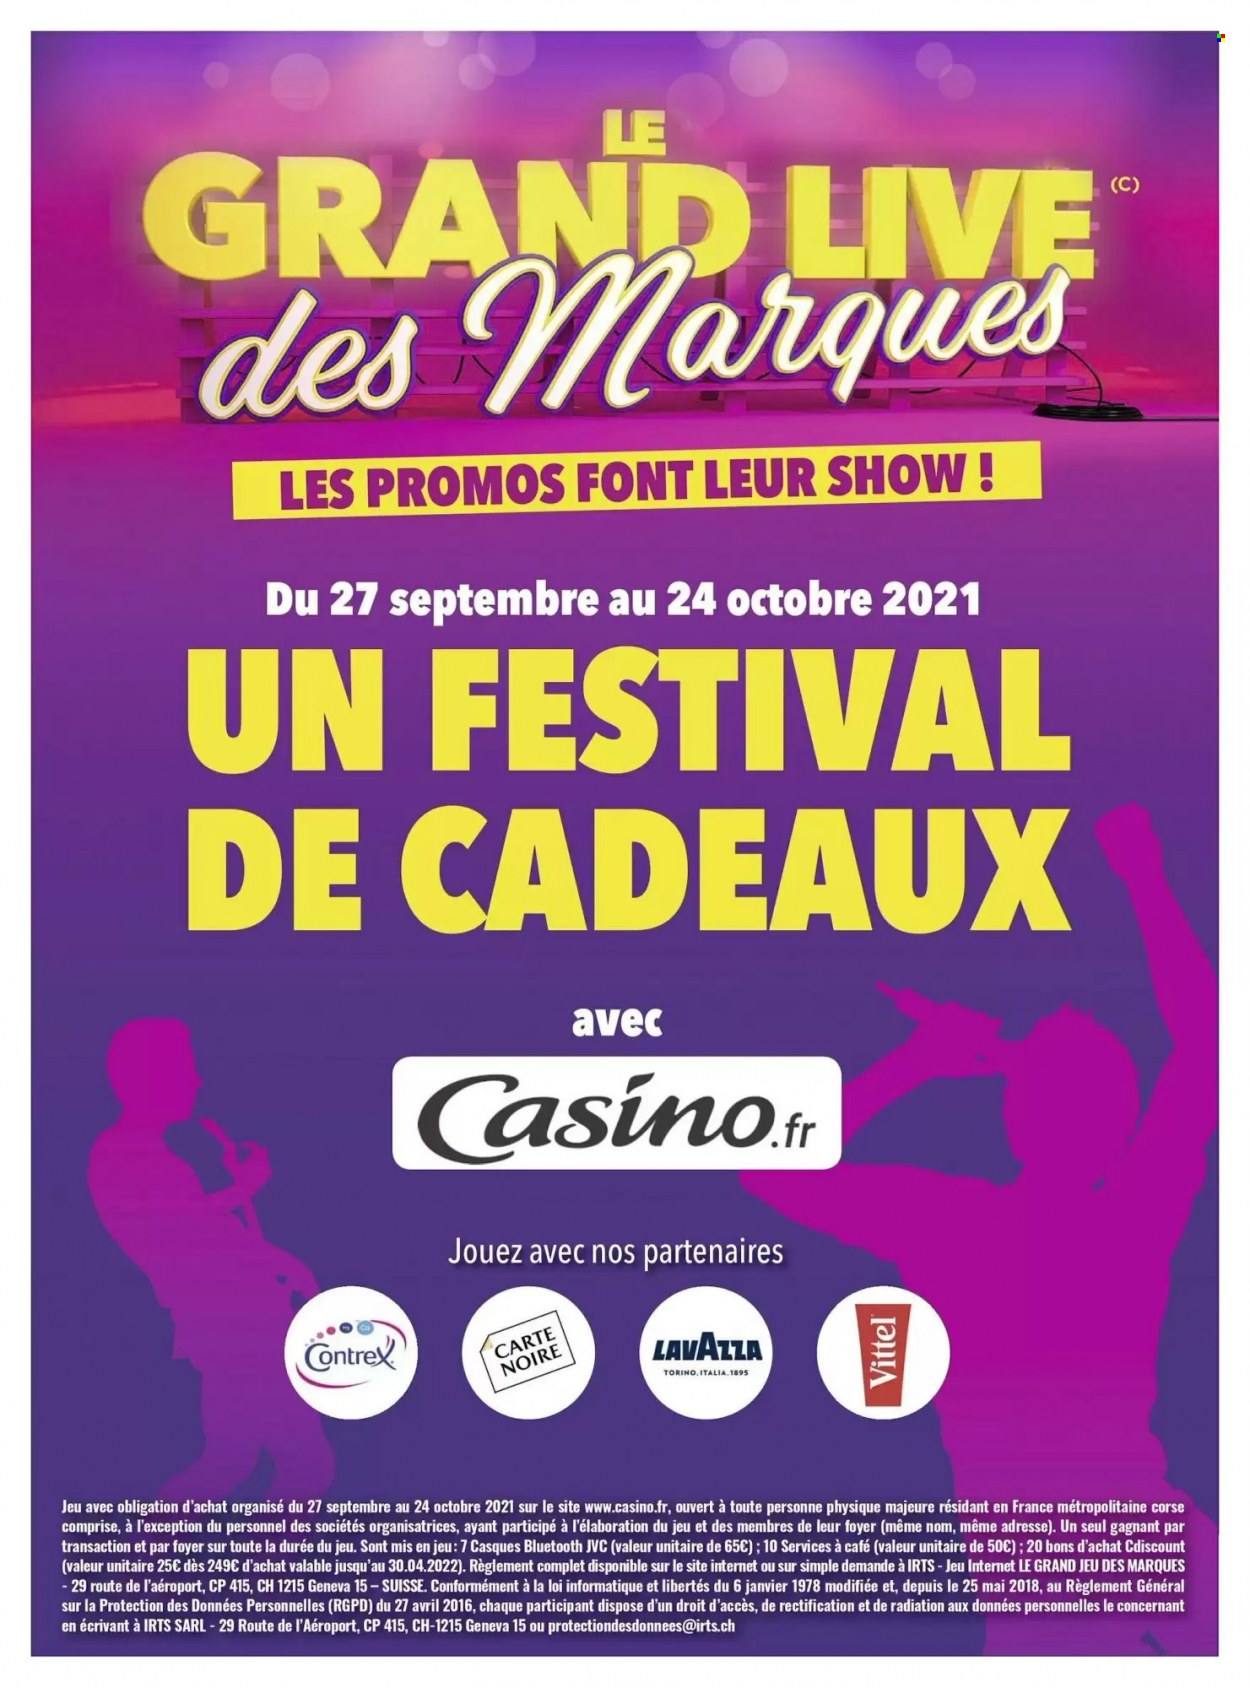 Catalogue Géant Casino - 04.10.2021 - 17.10.2021. 